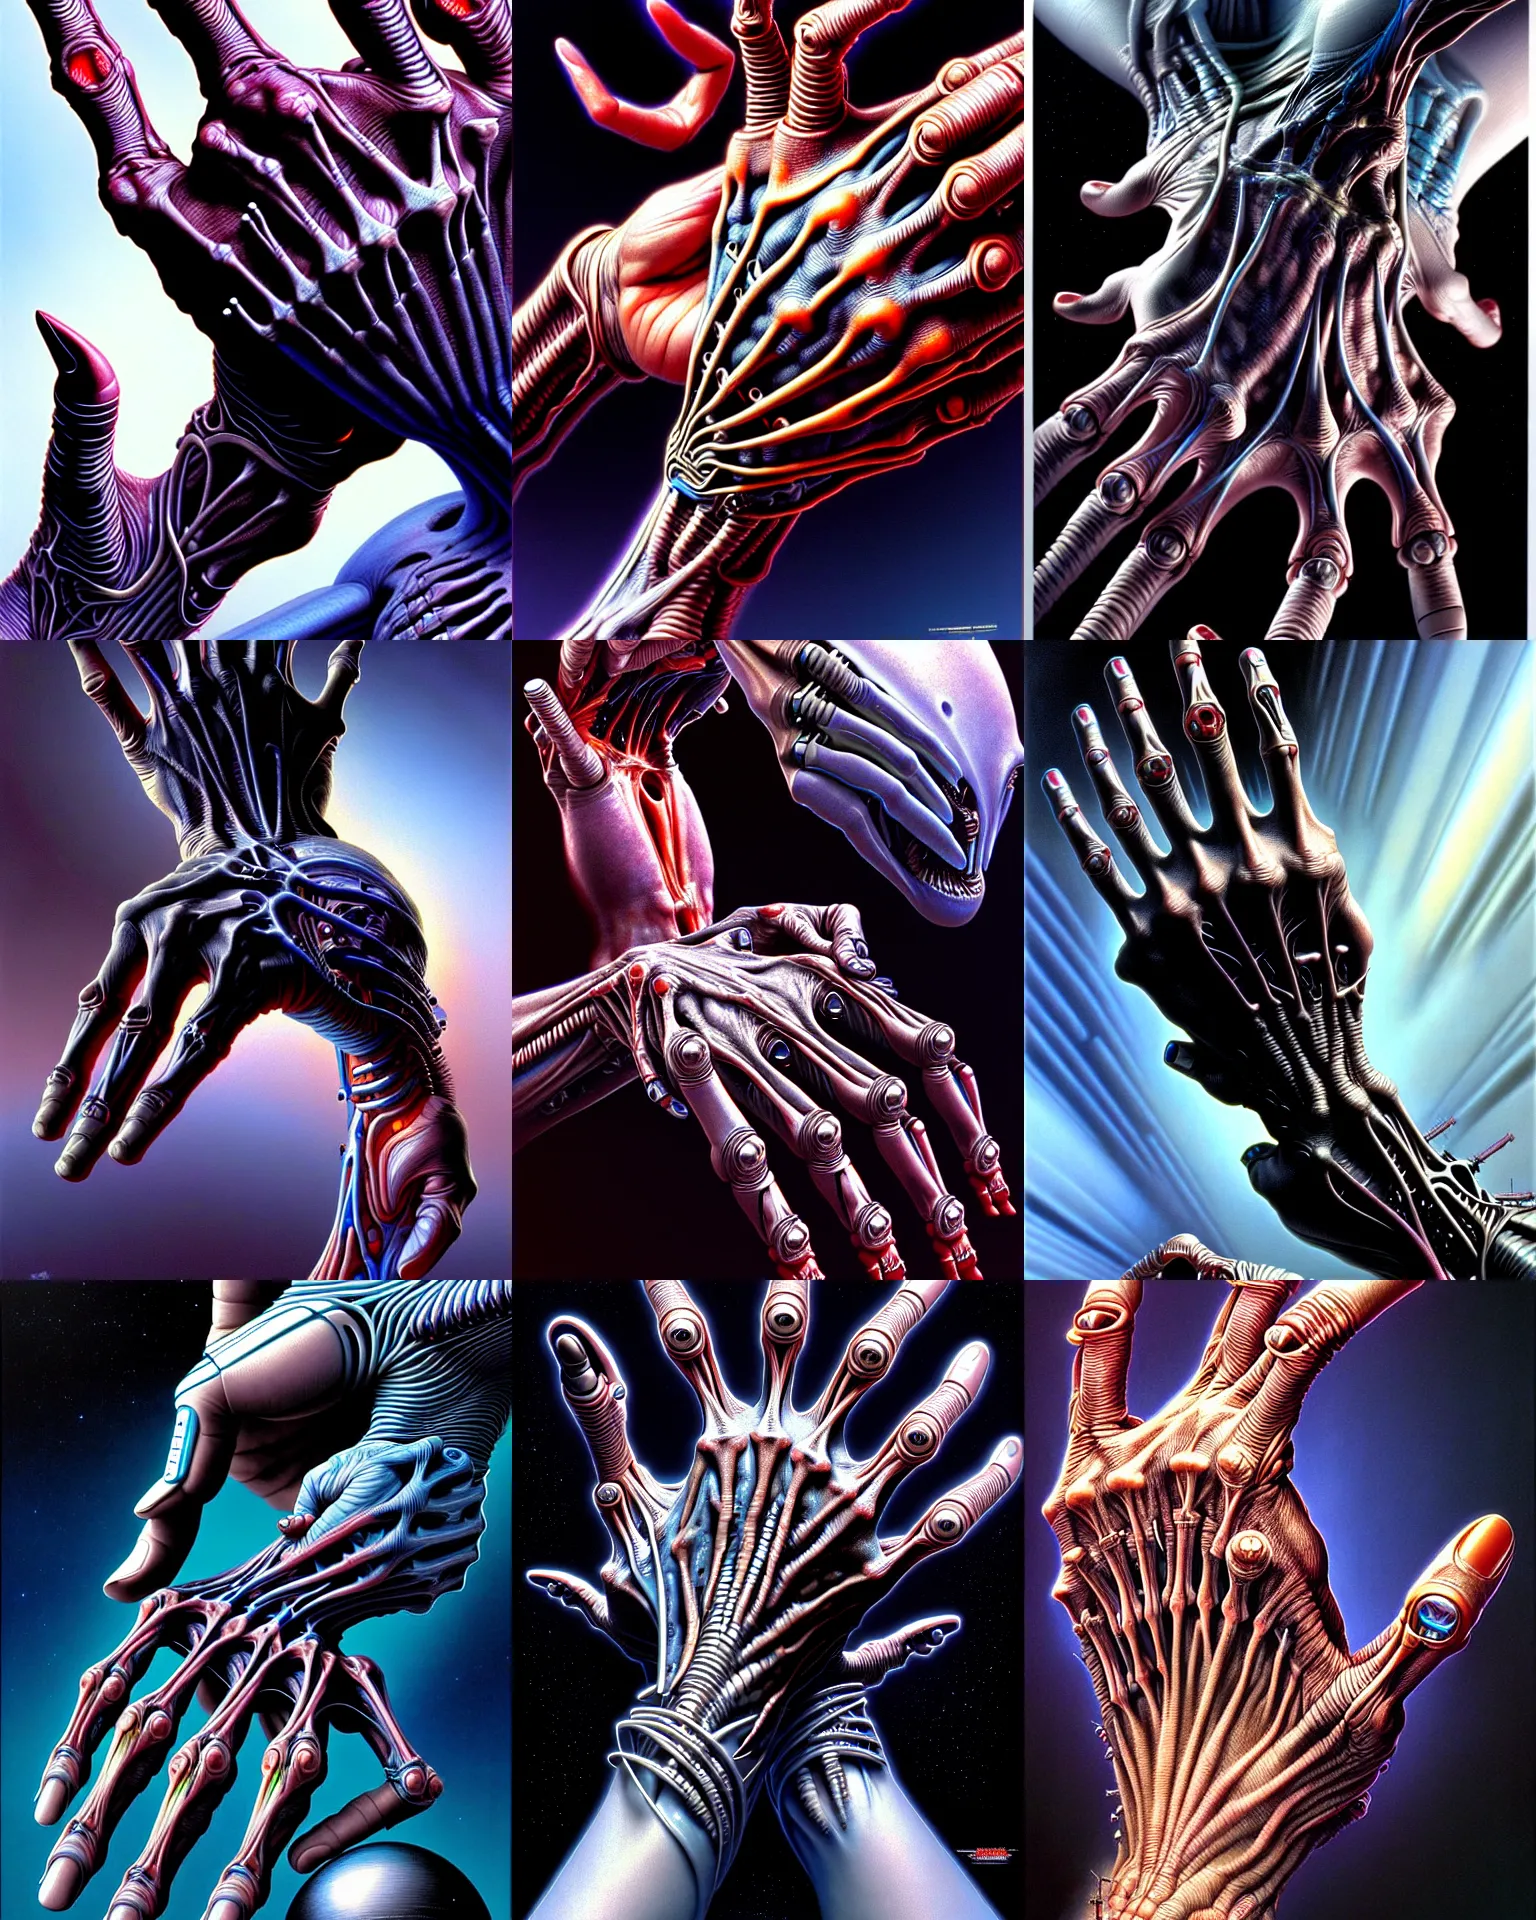 Prompt: anatomy of an alien cyborg hand, ultra realistic, cinematic, cinematic, wide angle, intricate details, cyborg, highly detailed by boris vallejo, wayne barlowe, craig mullins, roberto ferri